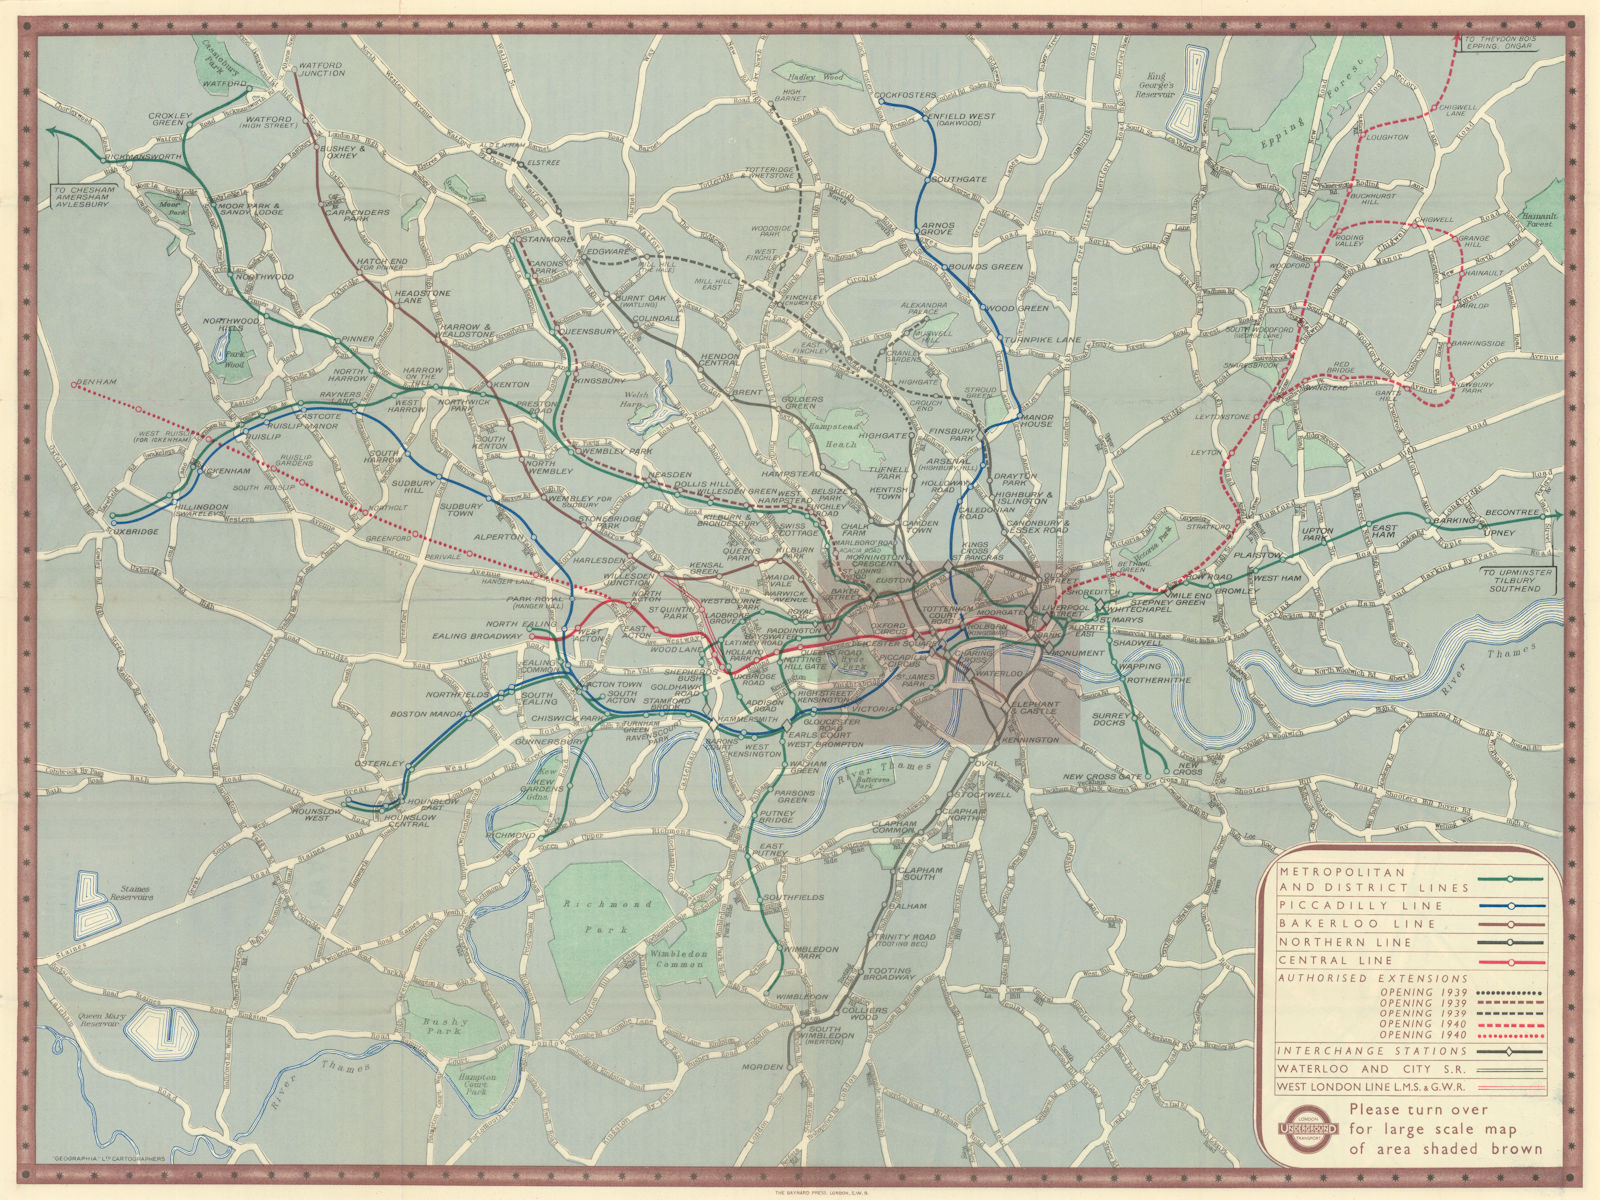 Associate Product London Transport Underground Railway map #1 1938 old vintage plan chart